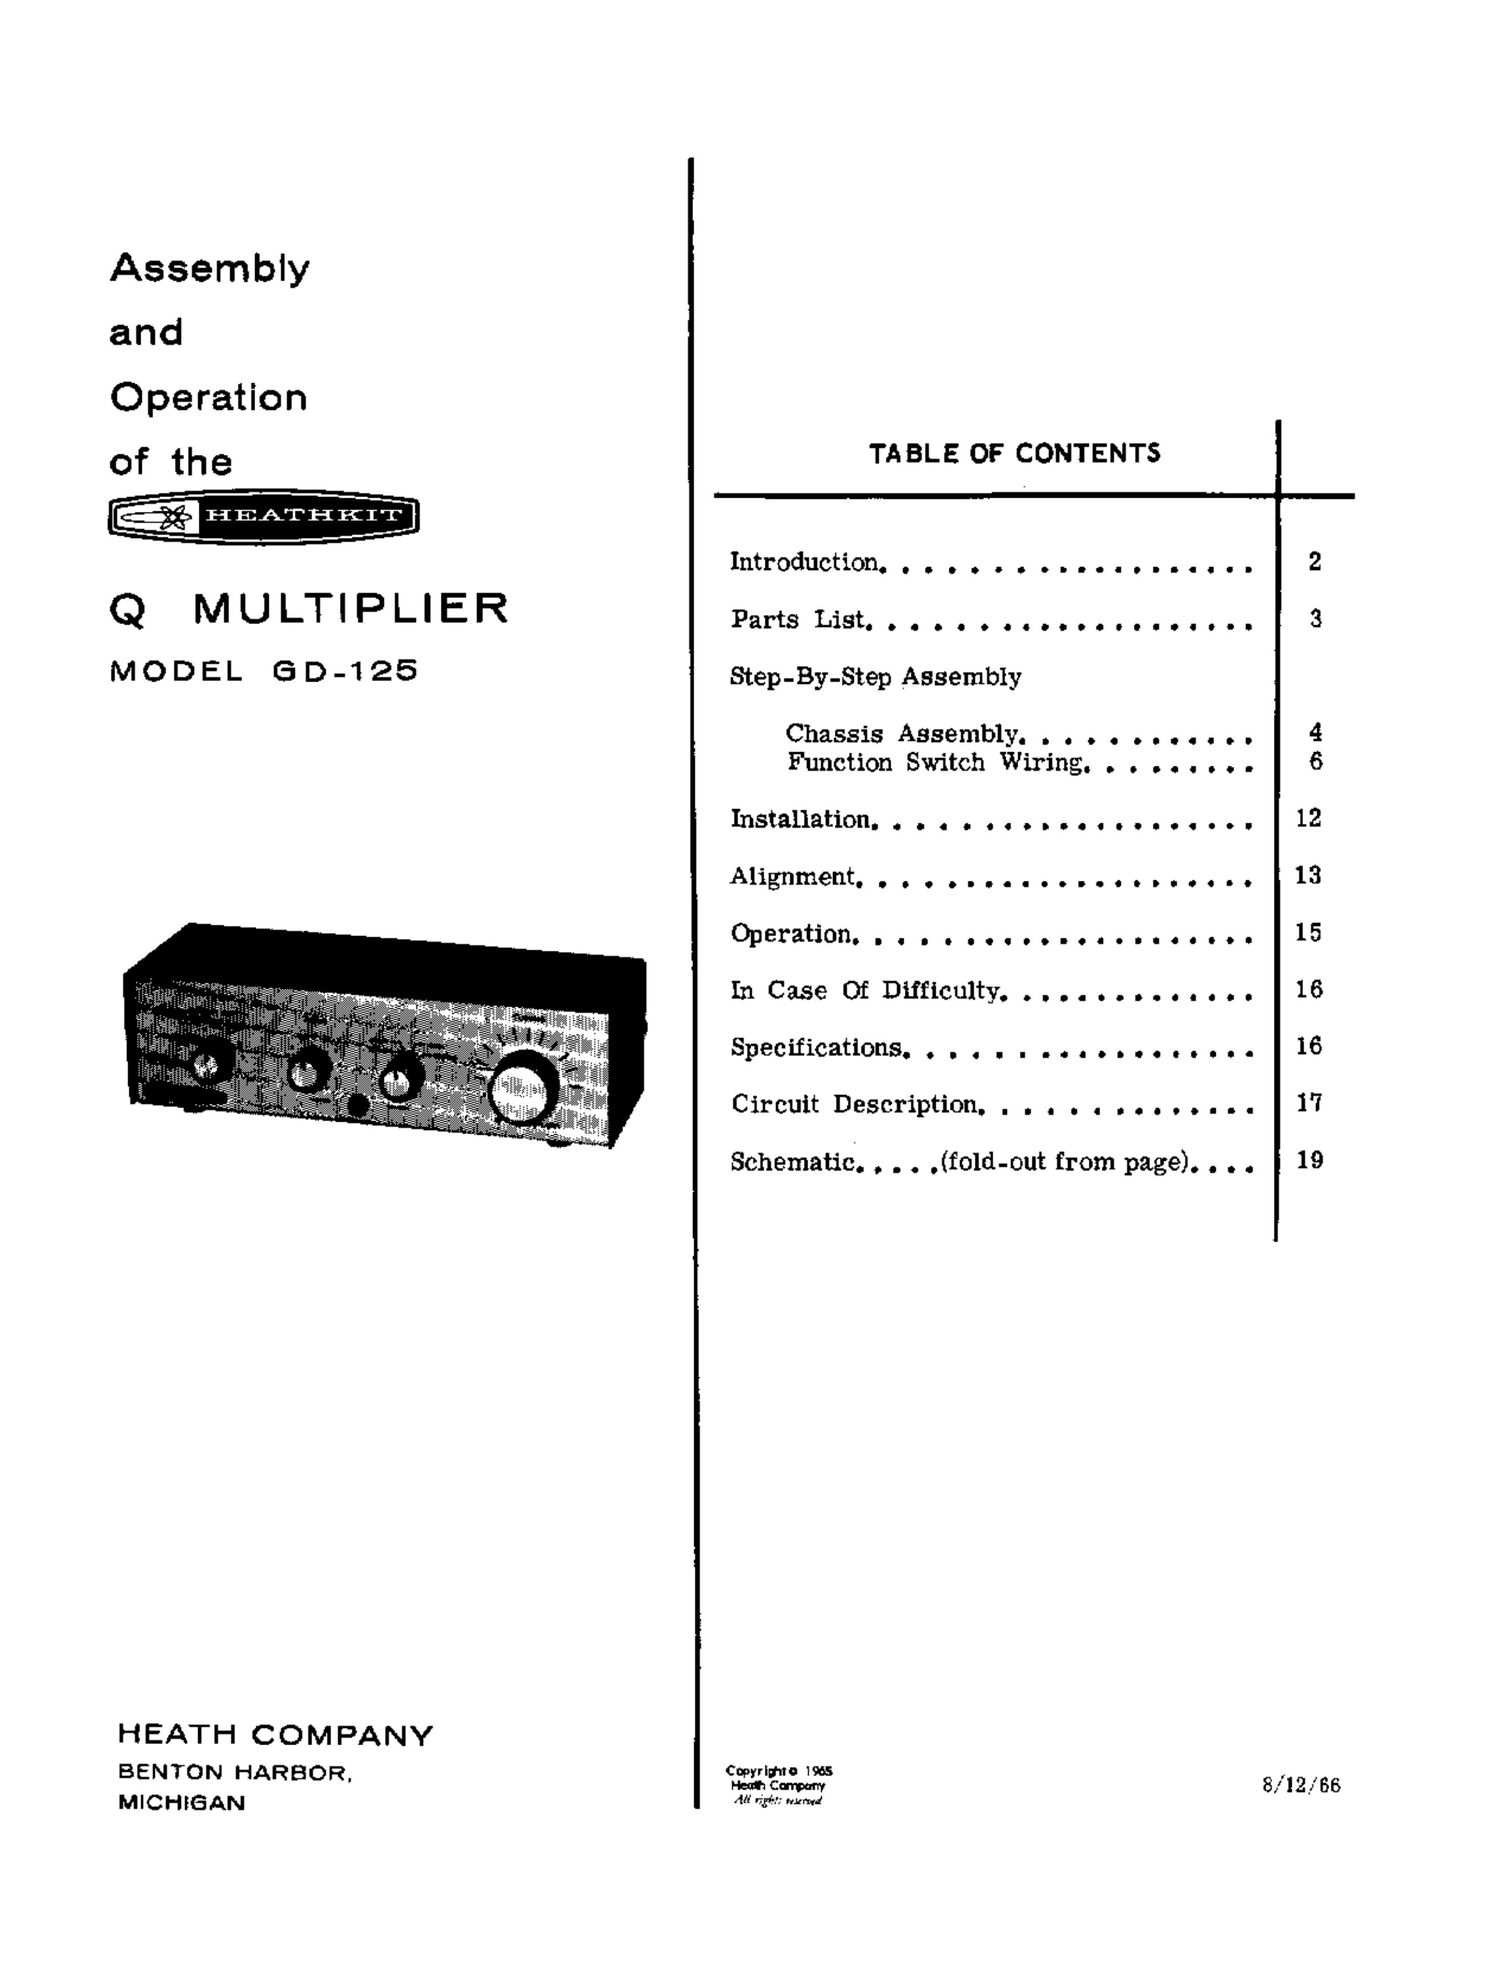 Heathkit GD 125Q Schematic Manual